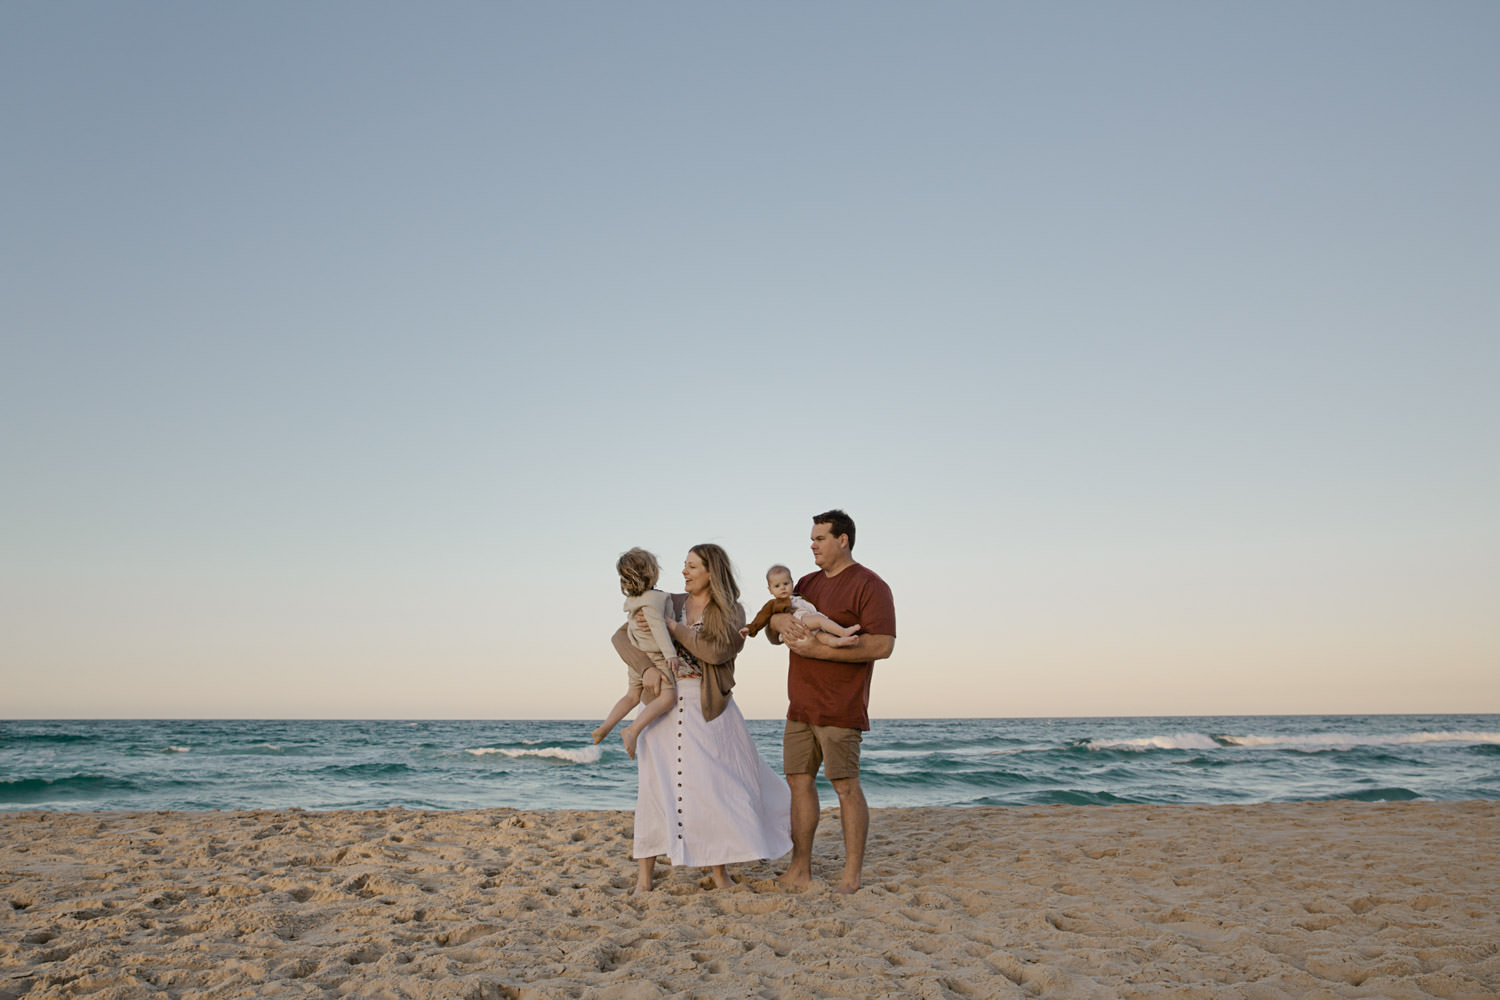 Beach-family-portraits_sunset-Photography-Beach_Brisbane-GoldCoast-Natural